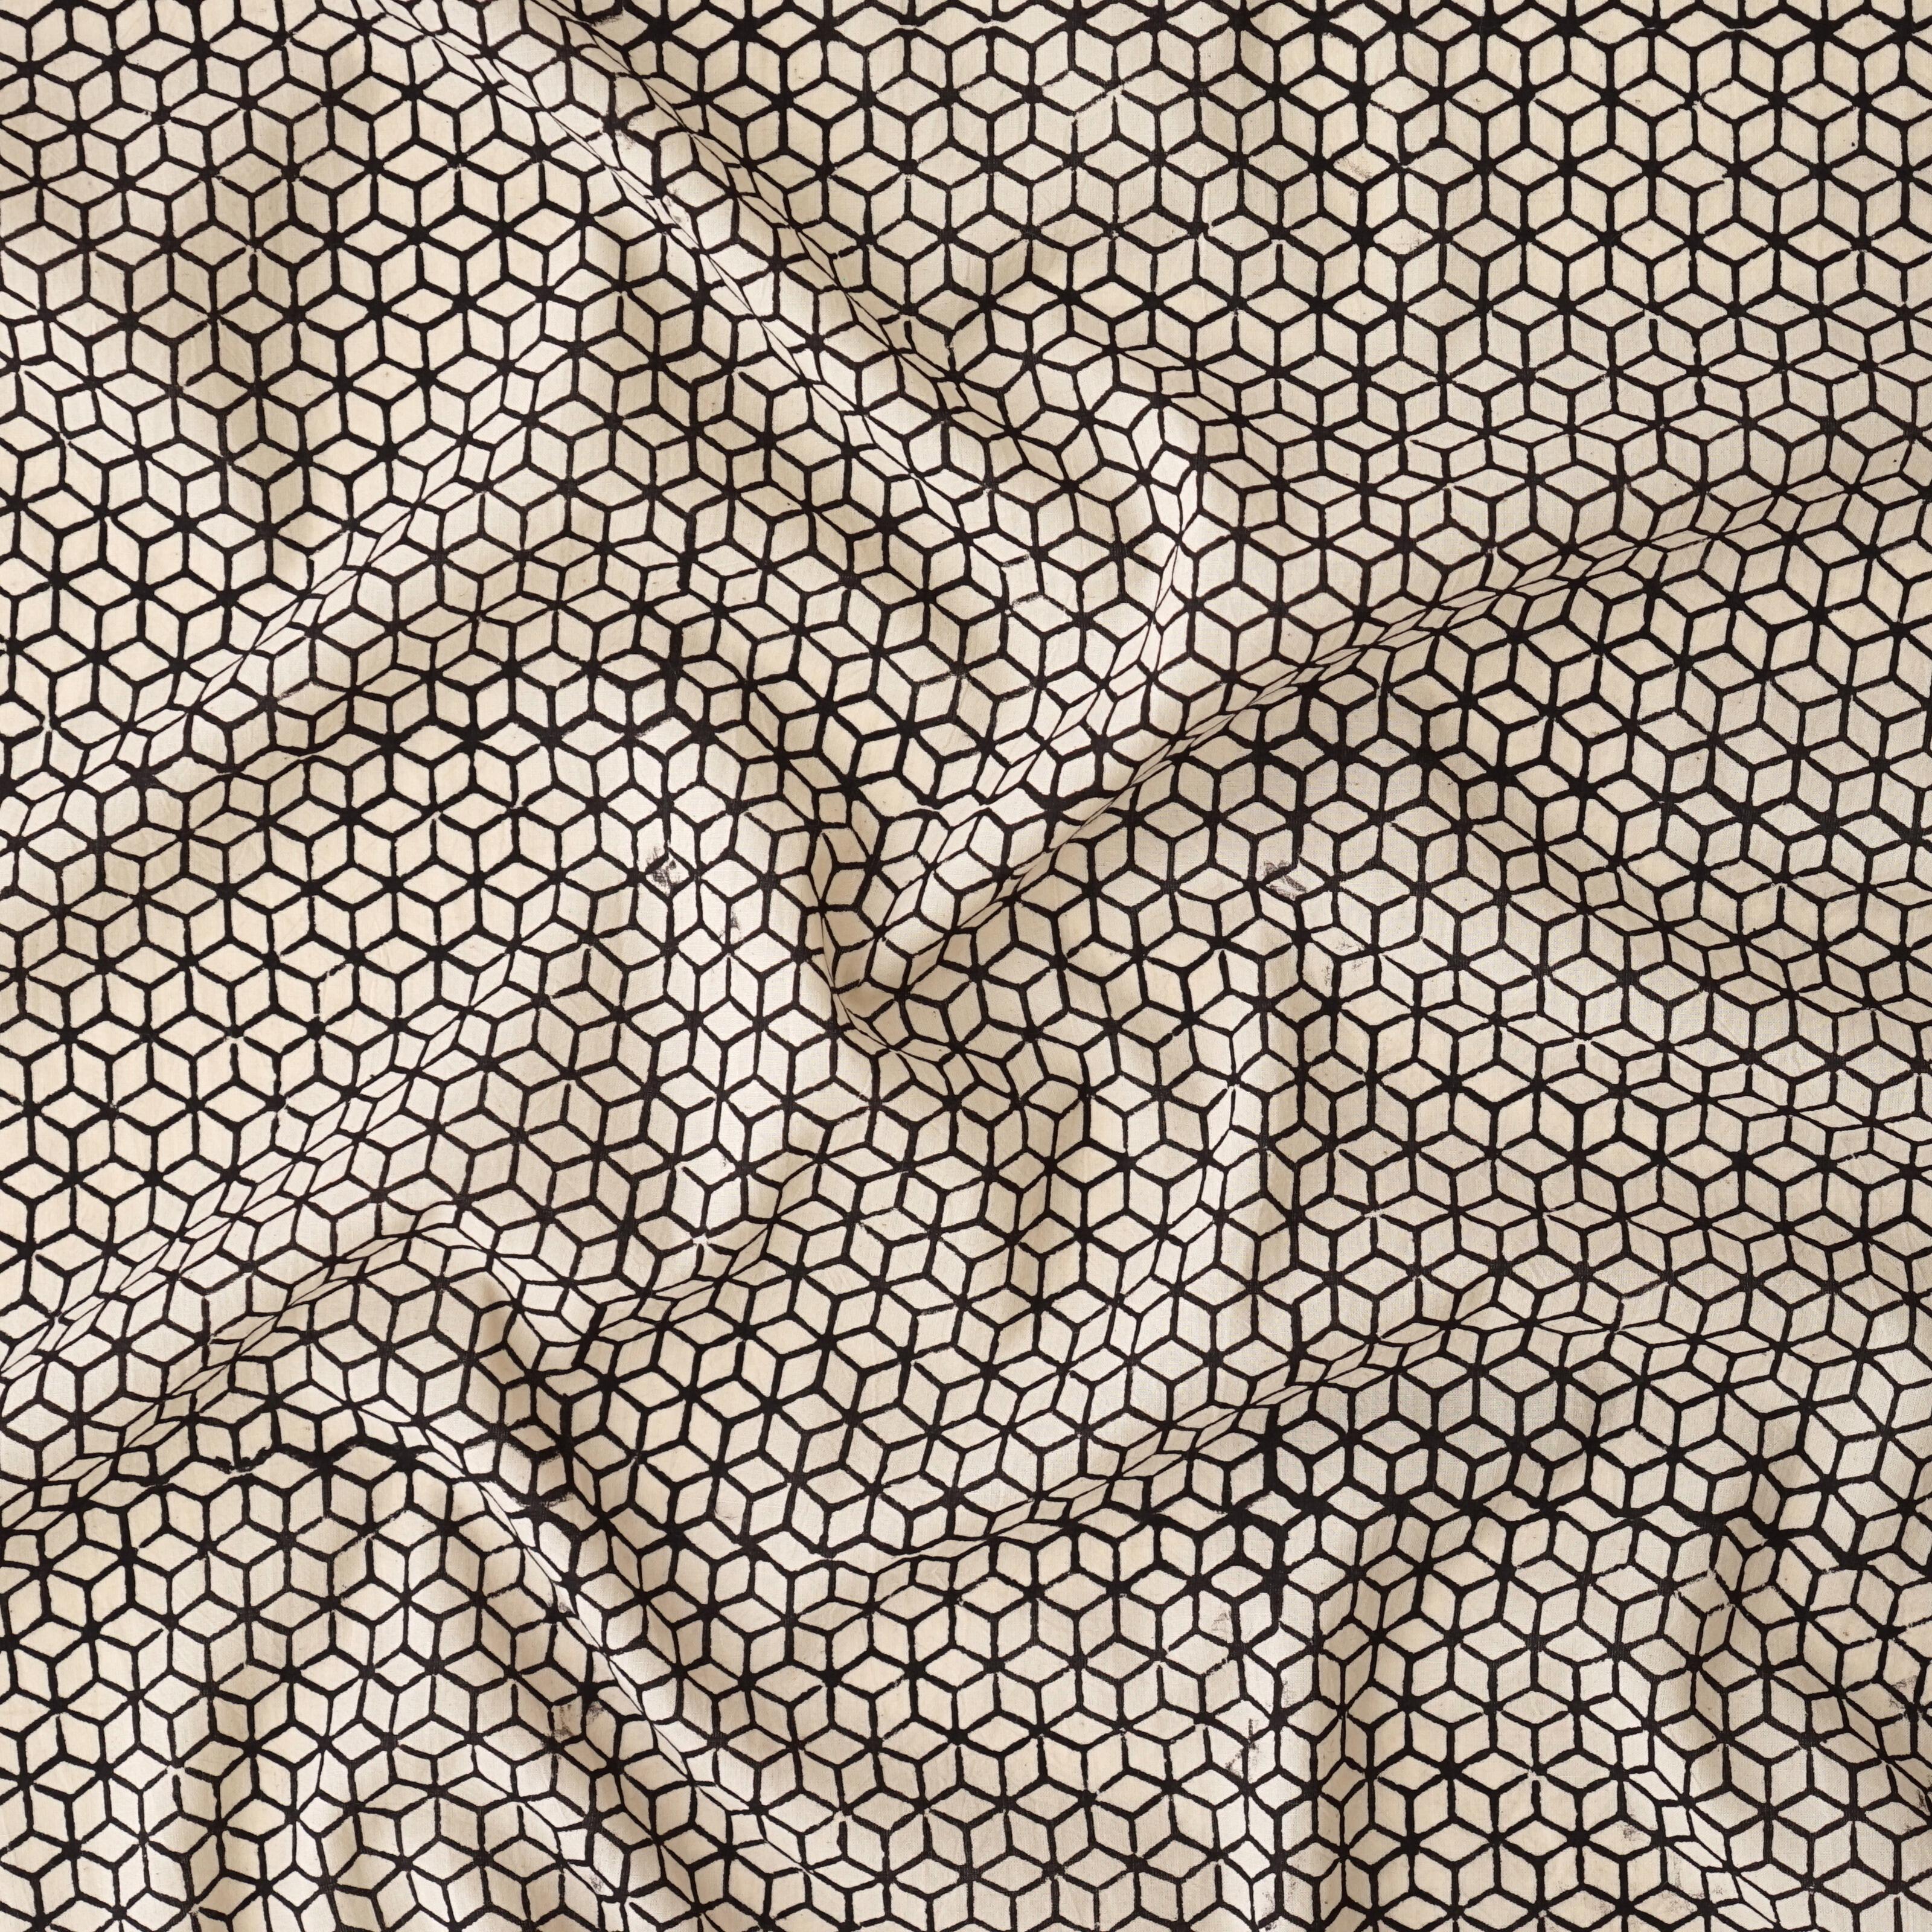 Block Printed Fabric, 100% Cotton, Ajrak Design: Beige Base, Iron Black Tumbling Block. Contrast